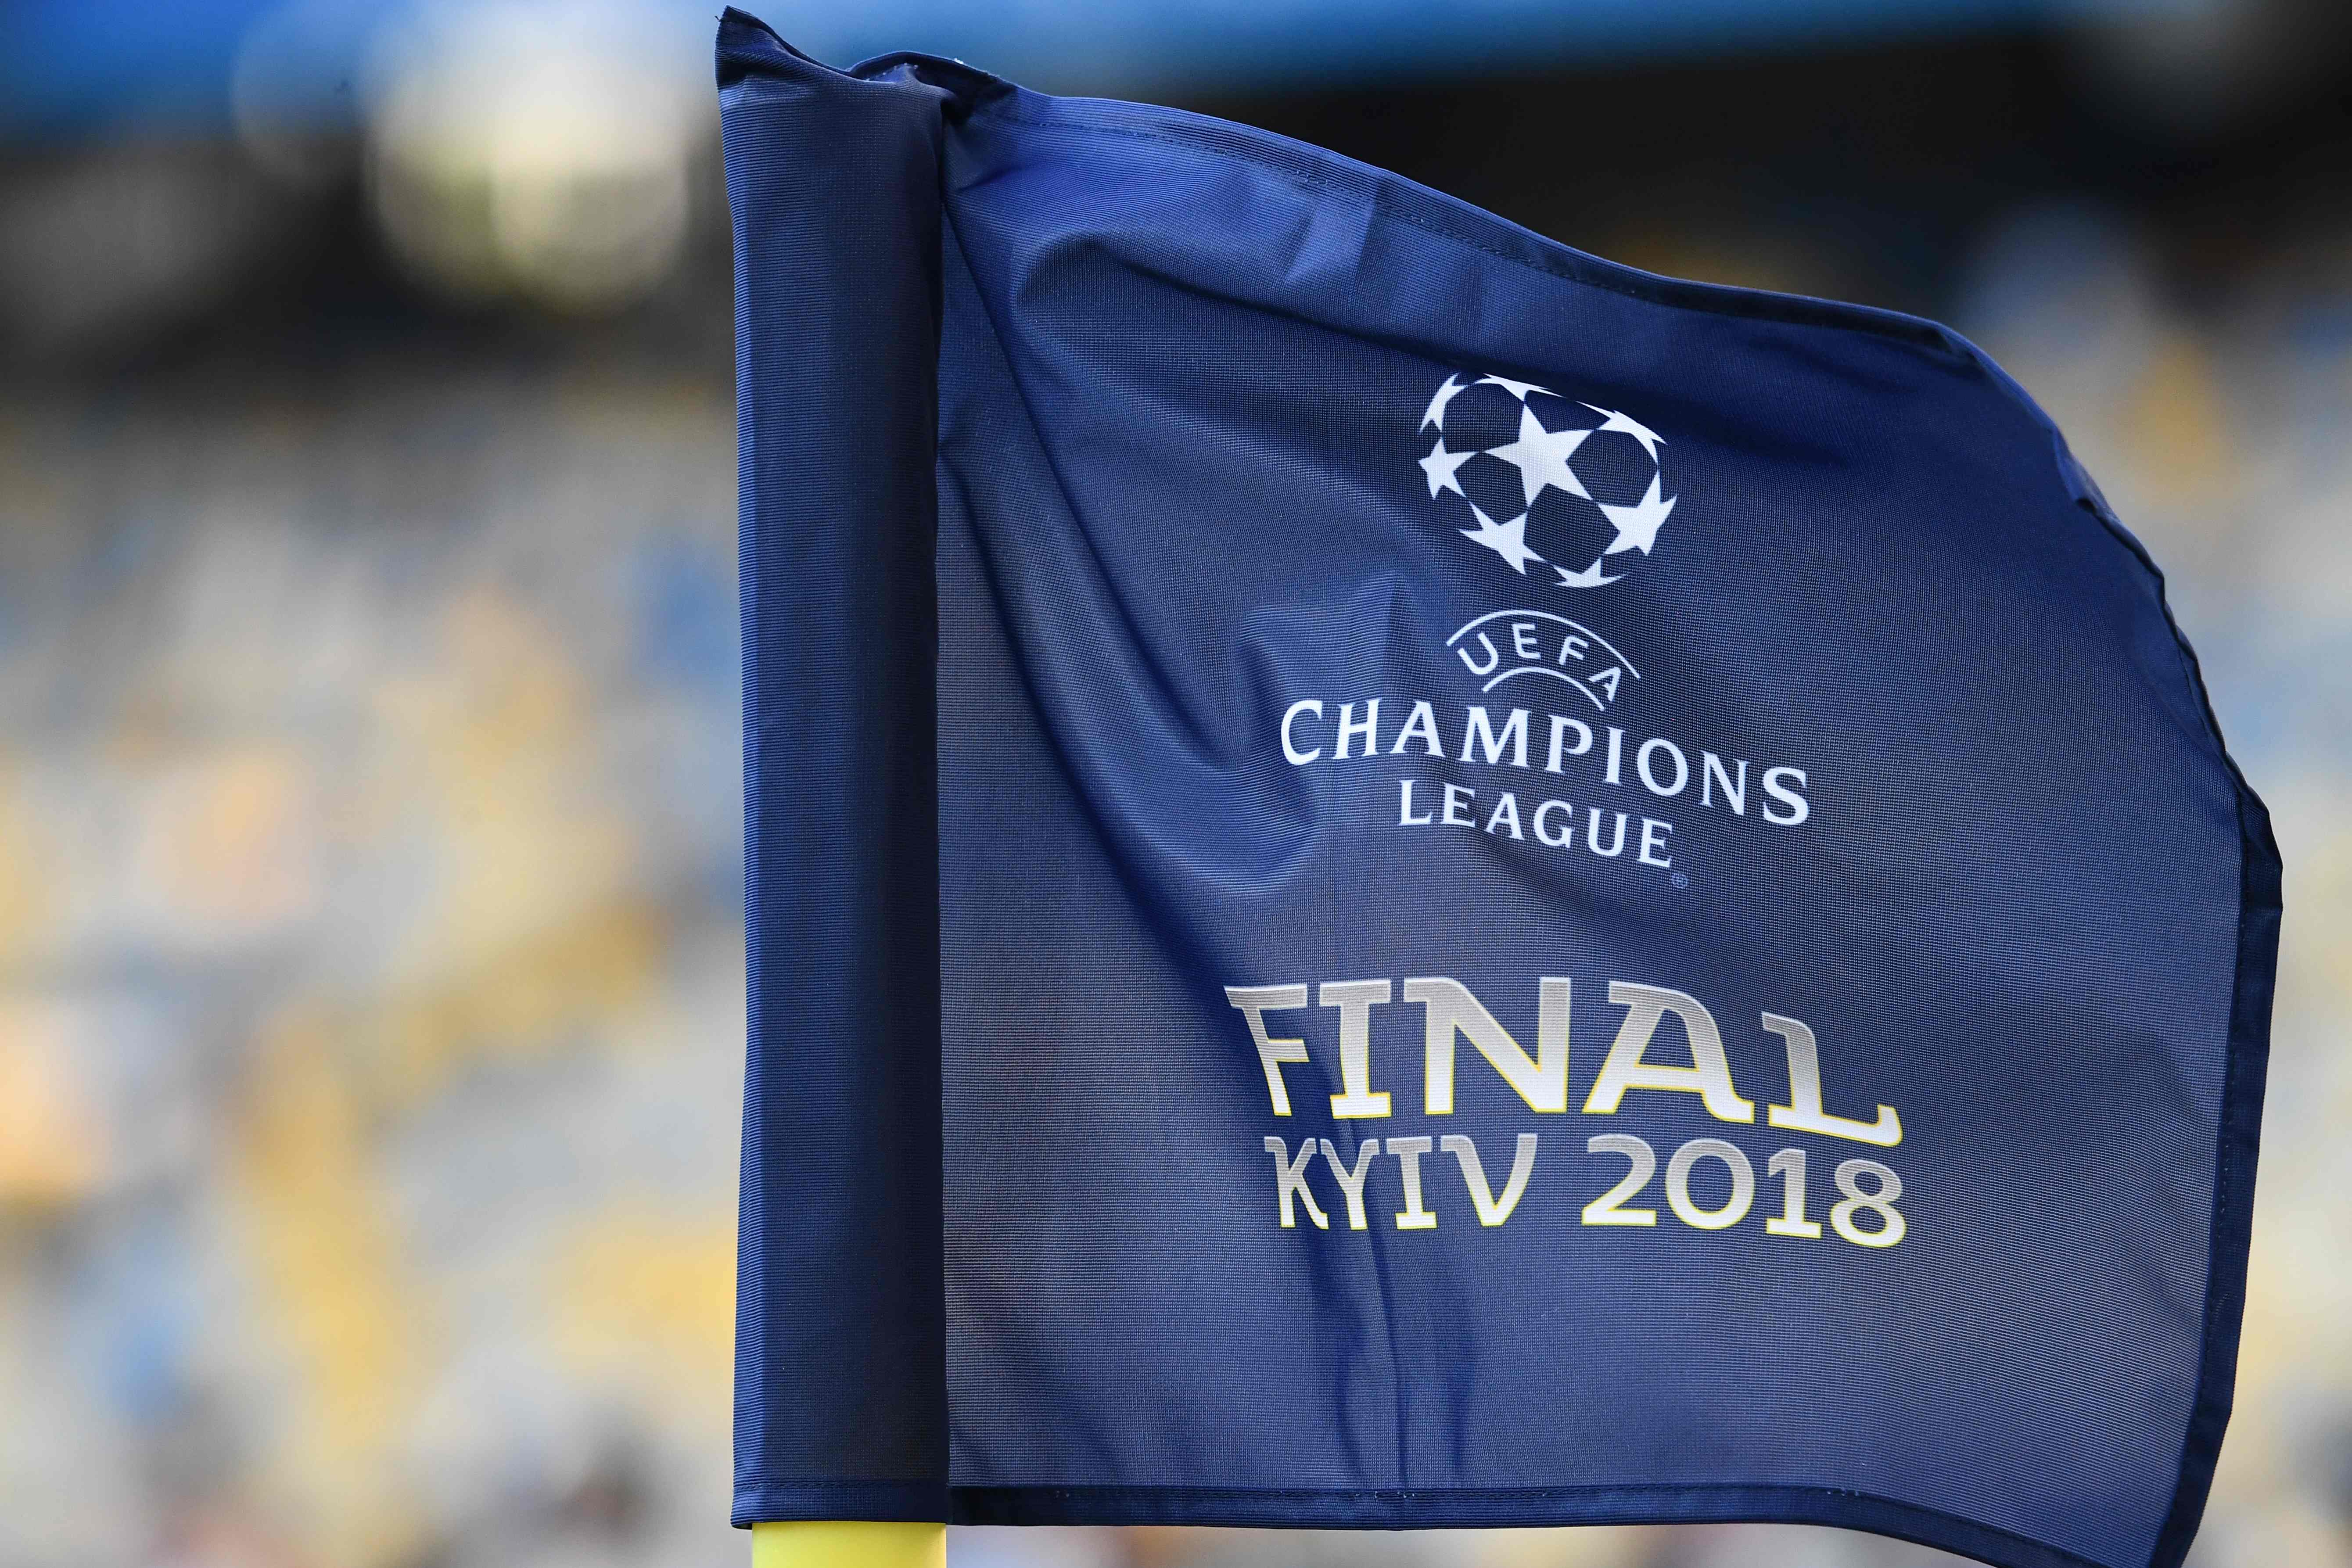 Three key Champions League final duels